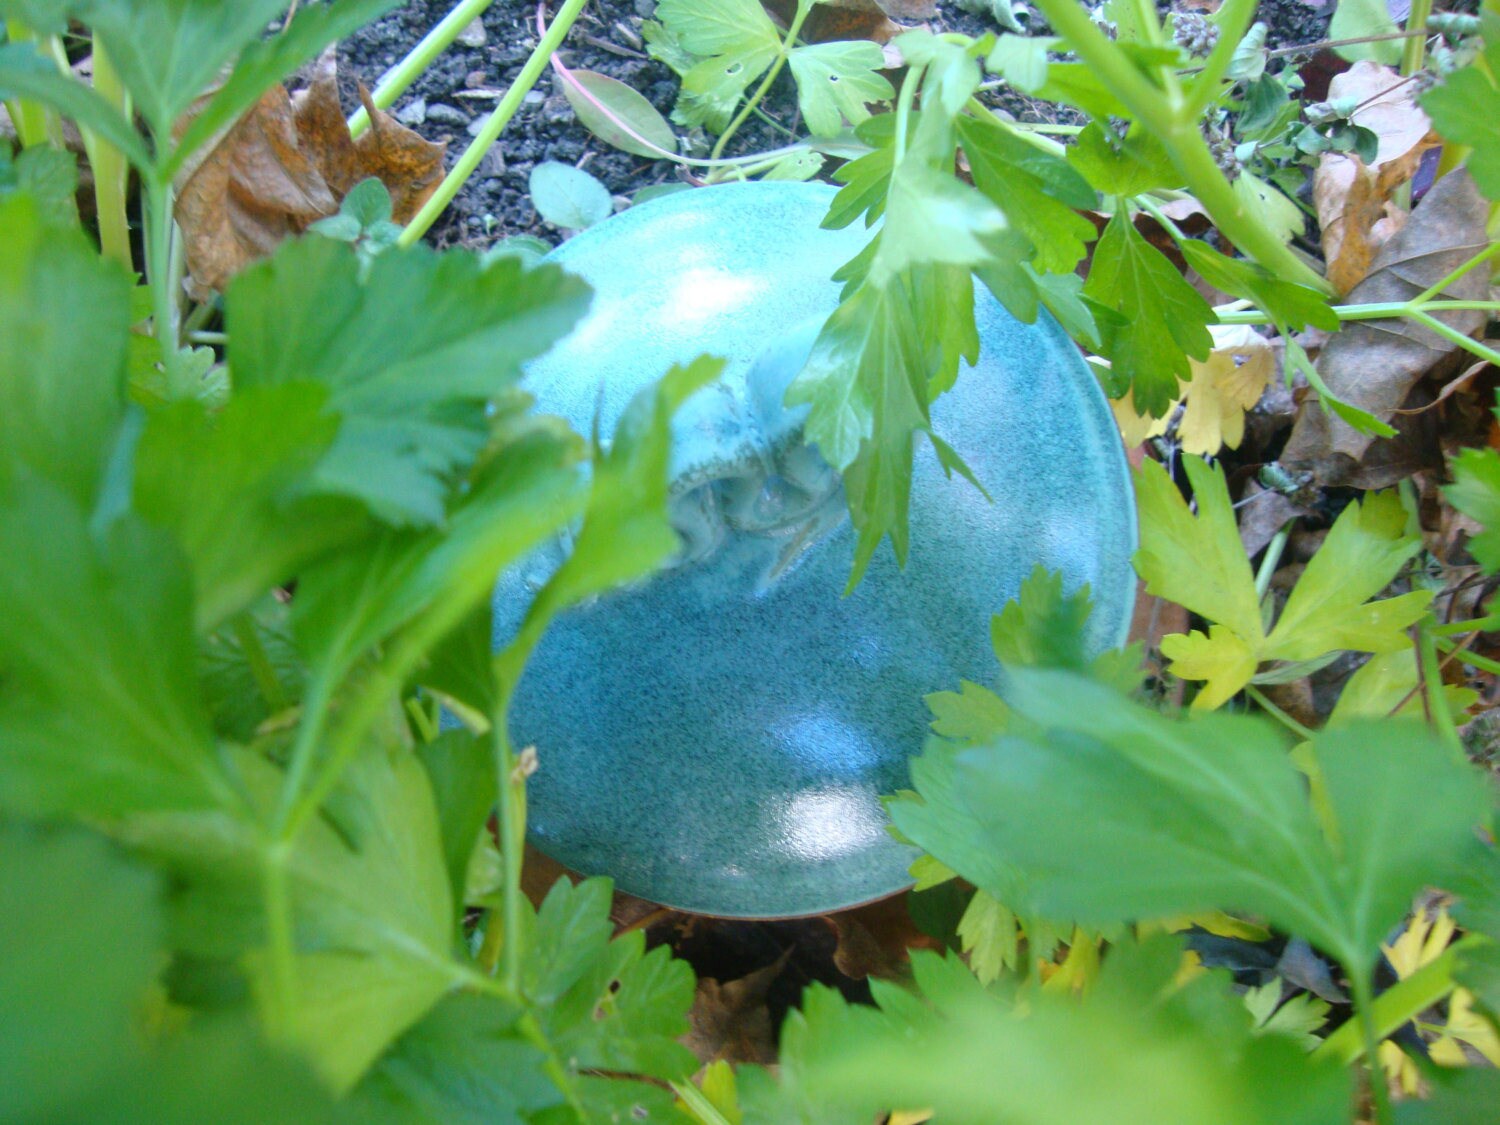 Four Ollas with lids - 1.25 Gallon Garden Irrigation Pot